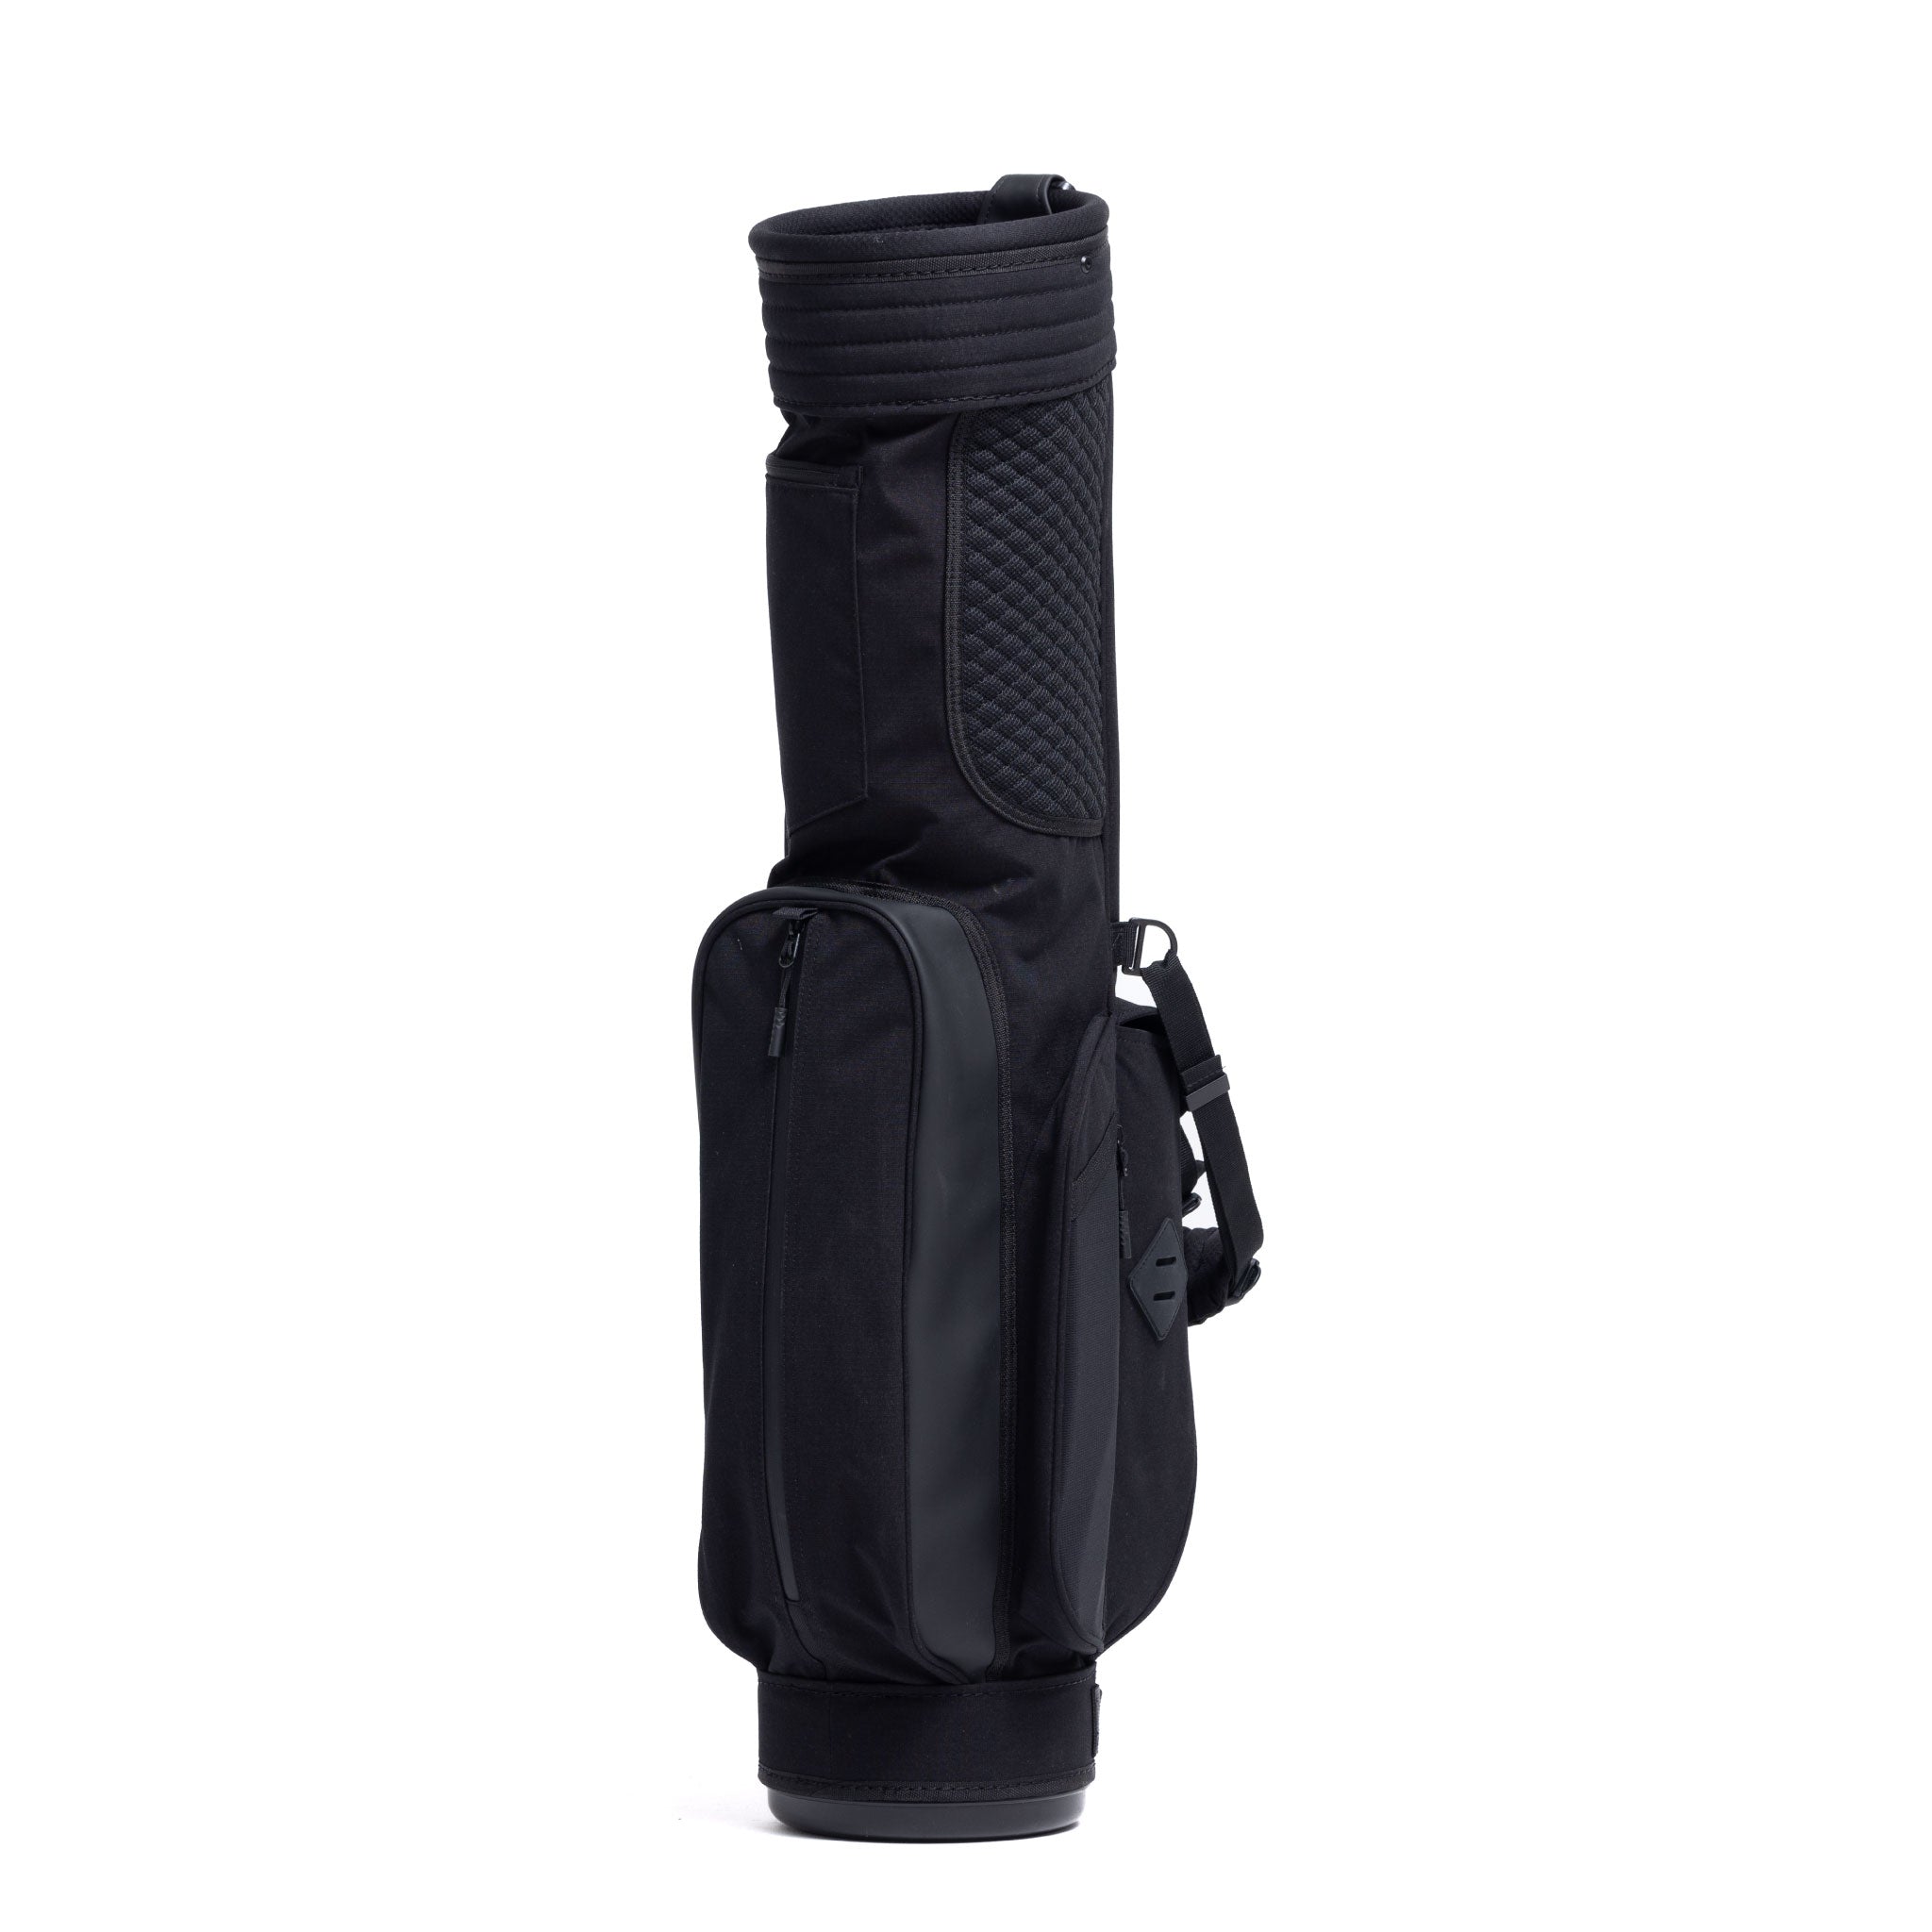 Jones Sports Co. Rover Carry Bag - Black